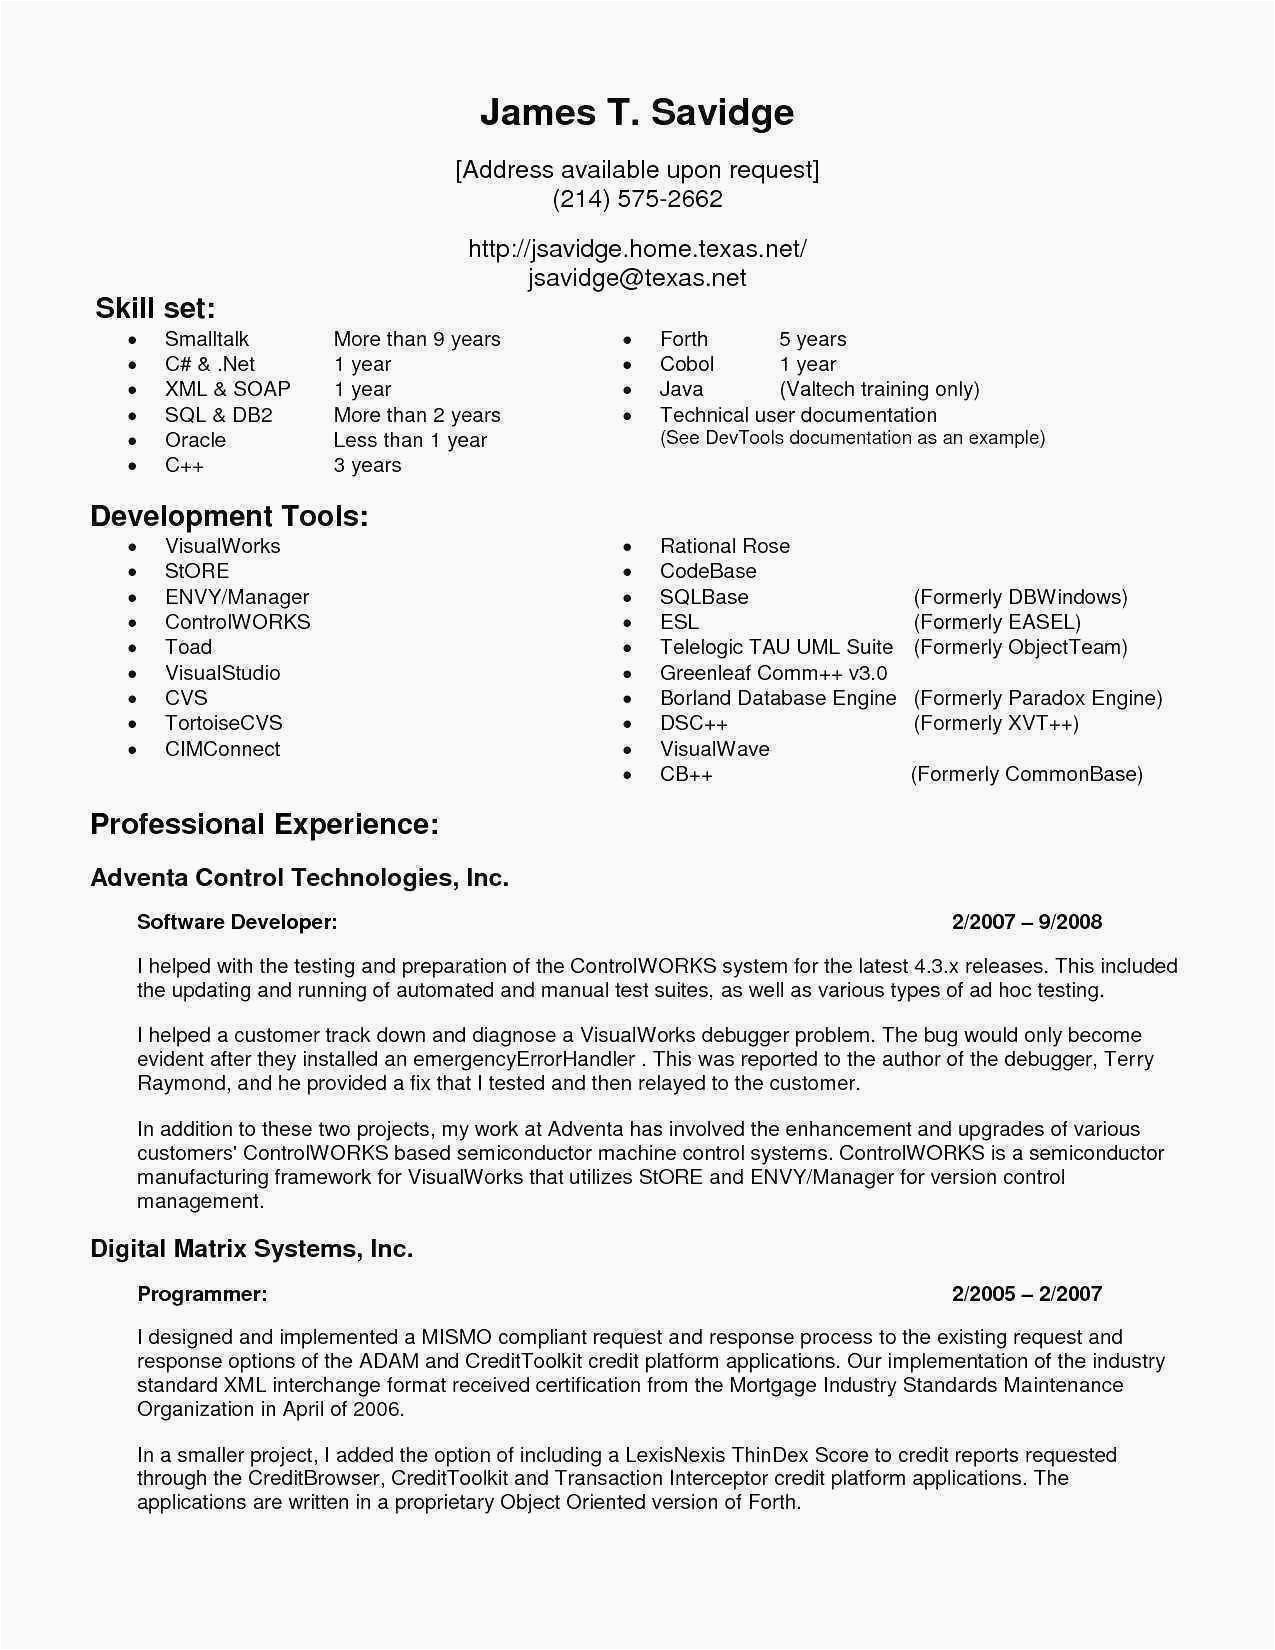 Manual Testing Resume Sample for 3 Years Experience Manual Testing Resume for 3 Years Experience Karoosha